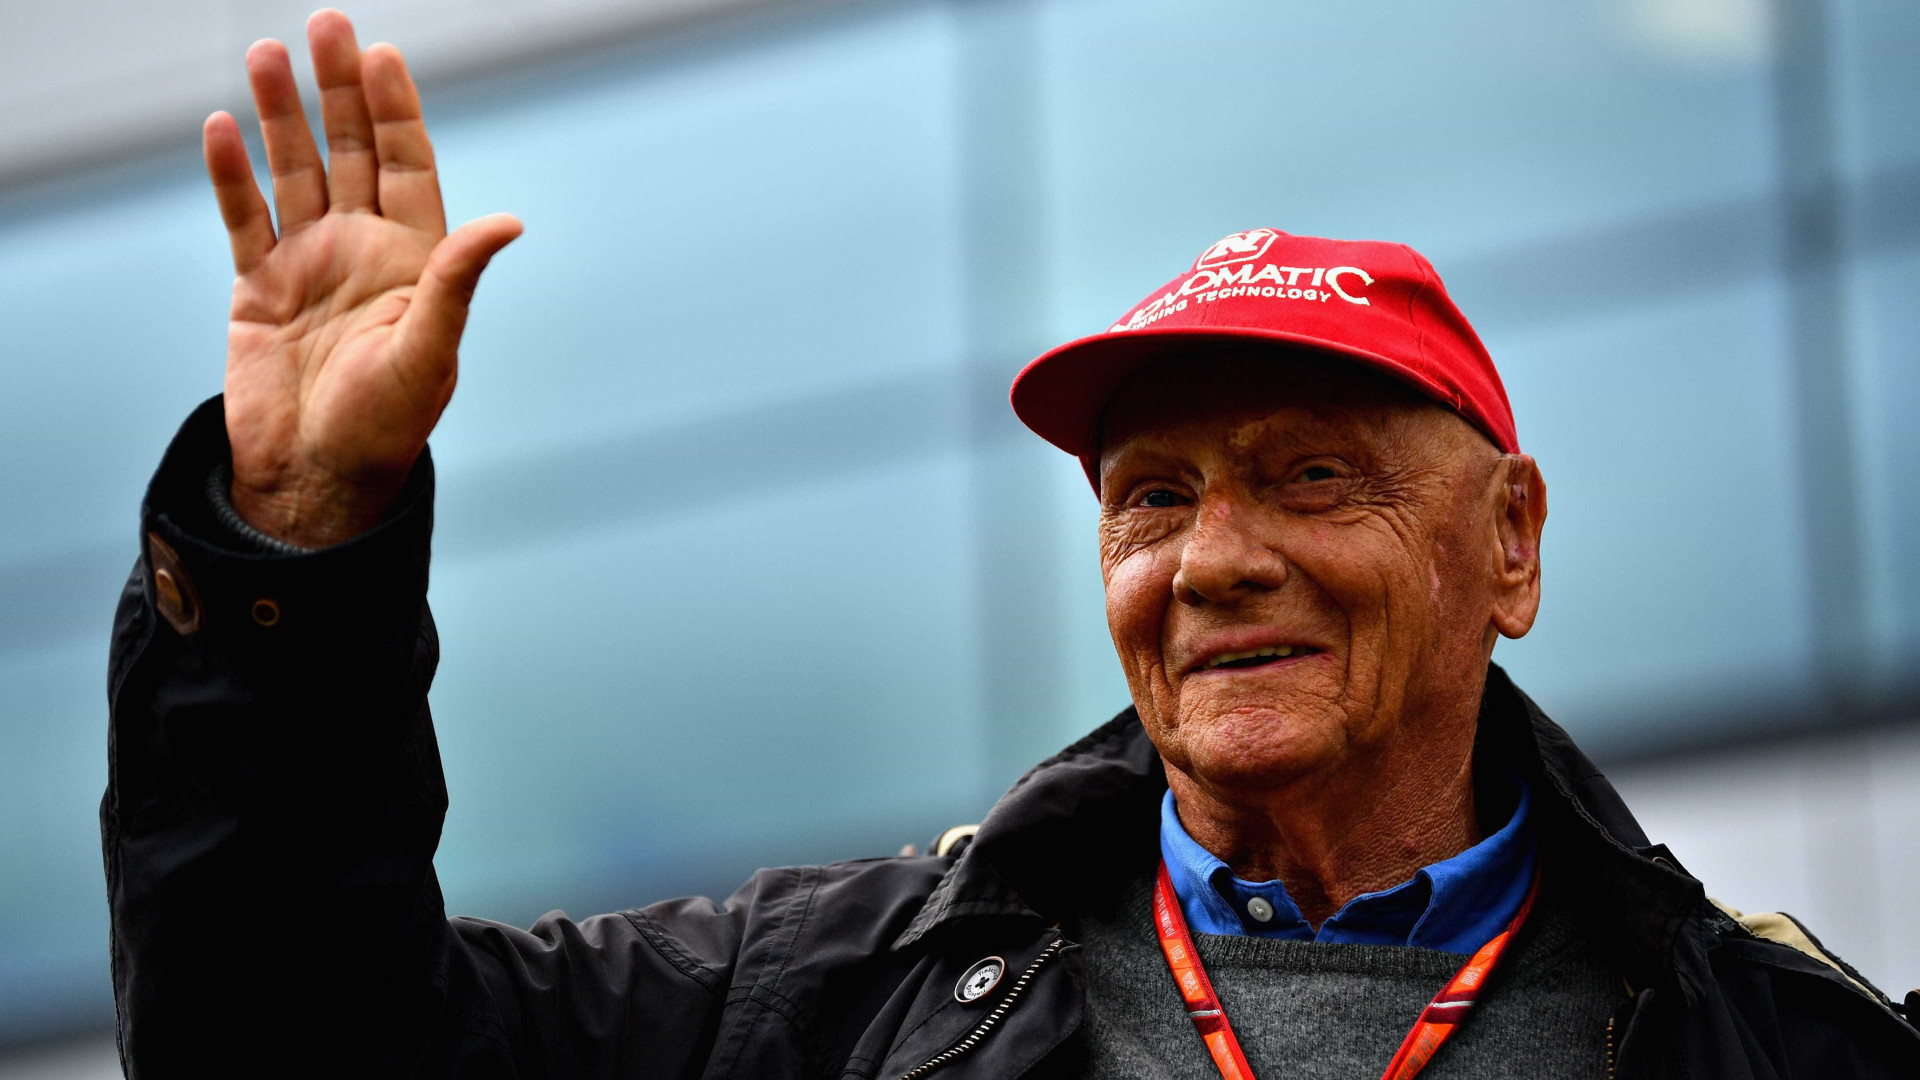 Niki Lauda passa por transplante de pulmão na Áustria